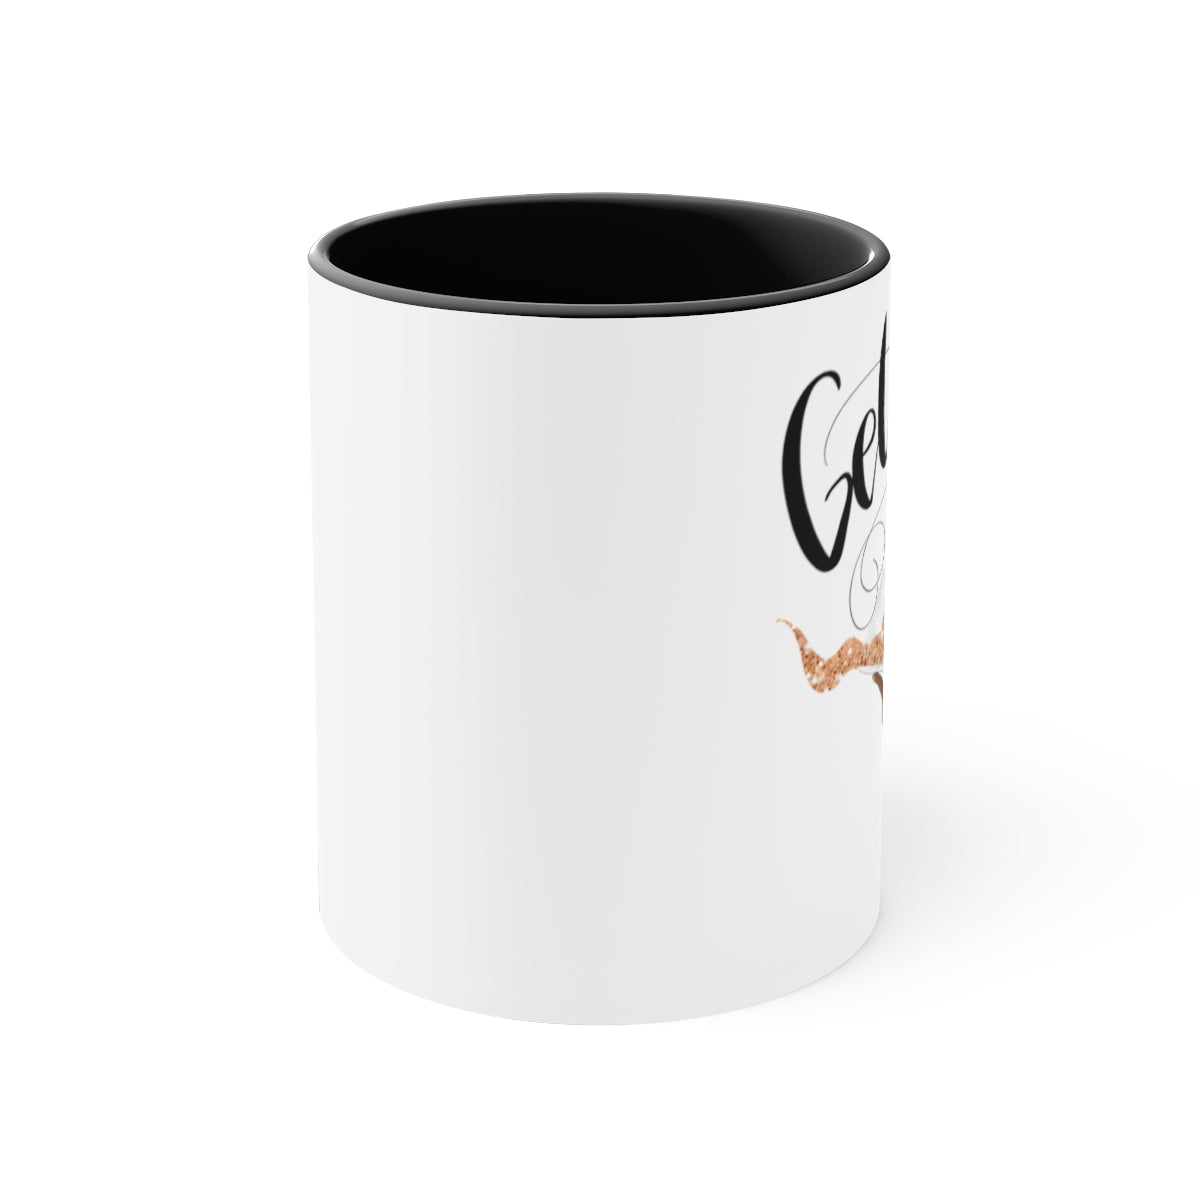 Get Lit Mug Coffee Mug-Holiday Coffee Mugs-New Years Coffee Cup-Gift for Her-Holiday Picks